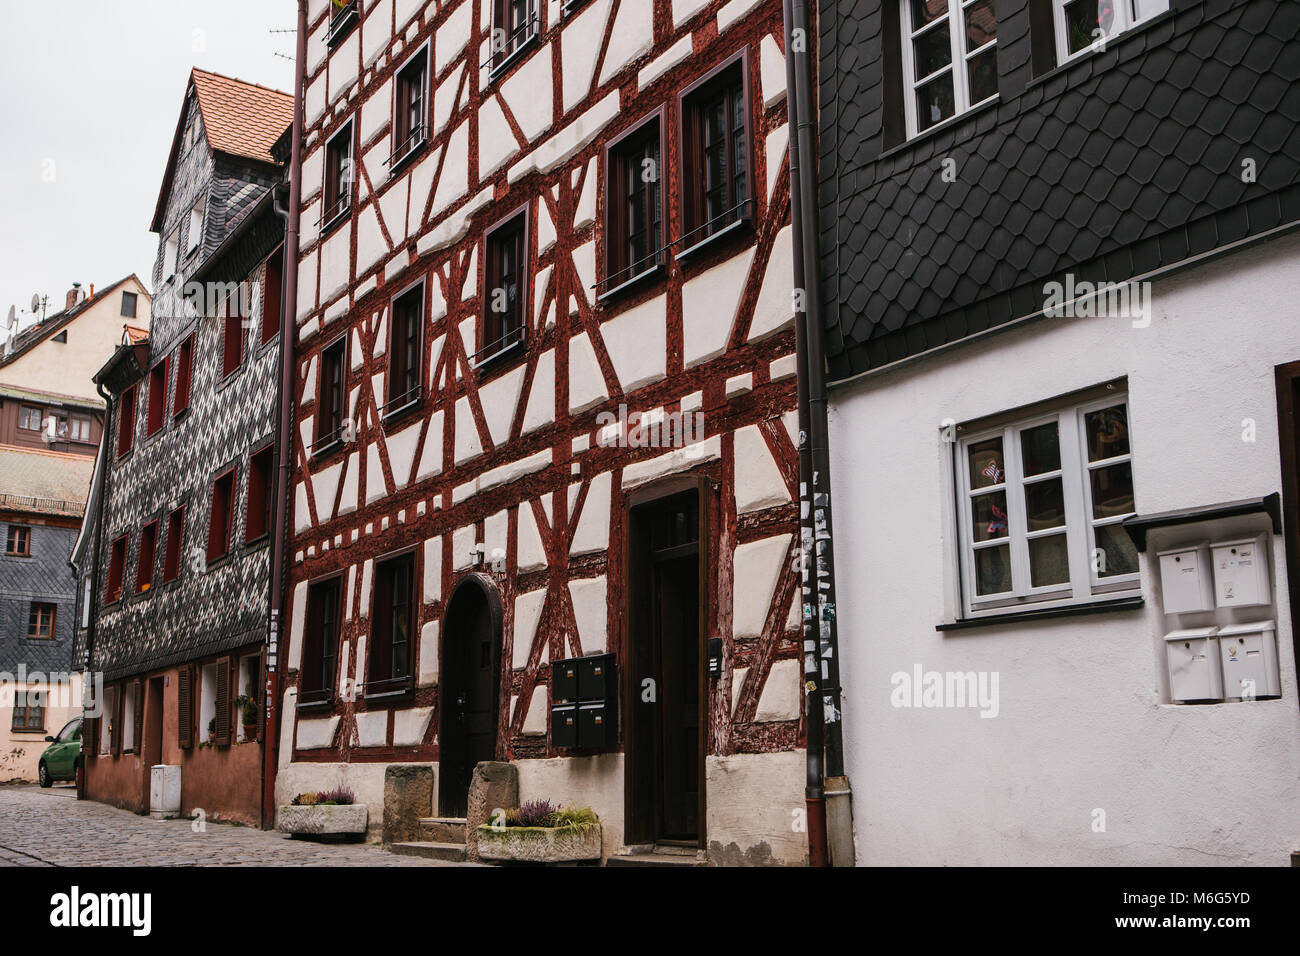 Bavarian Style Architecture Stock Photos & Bavarian Style Architecture